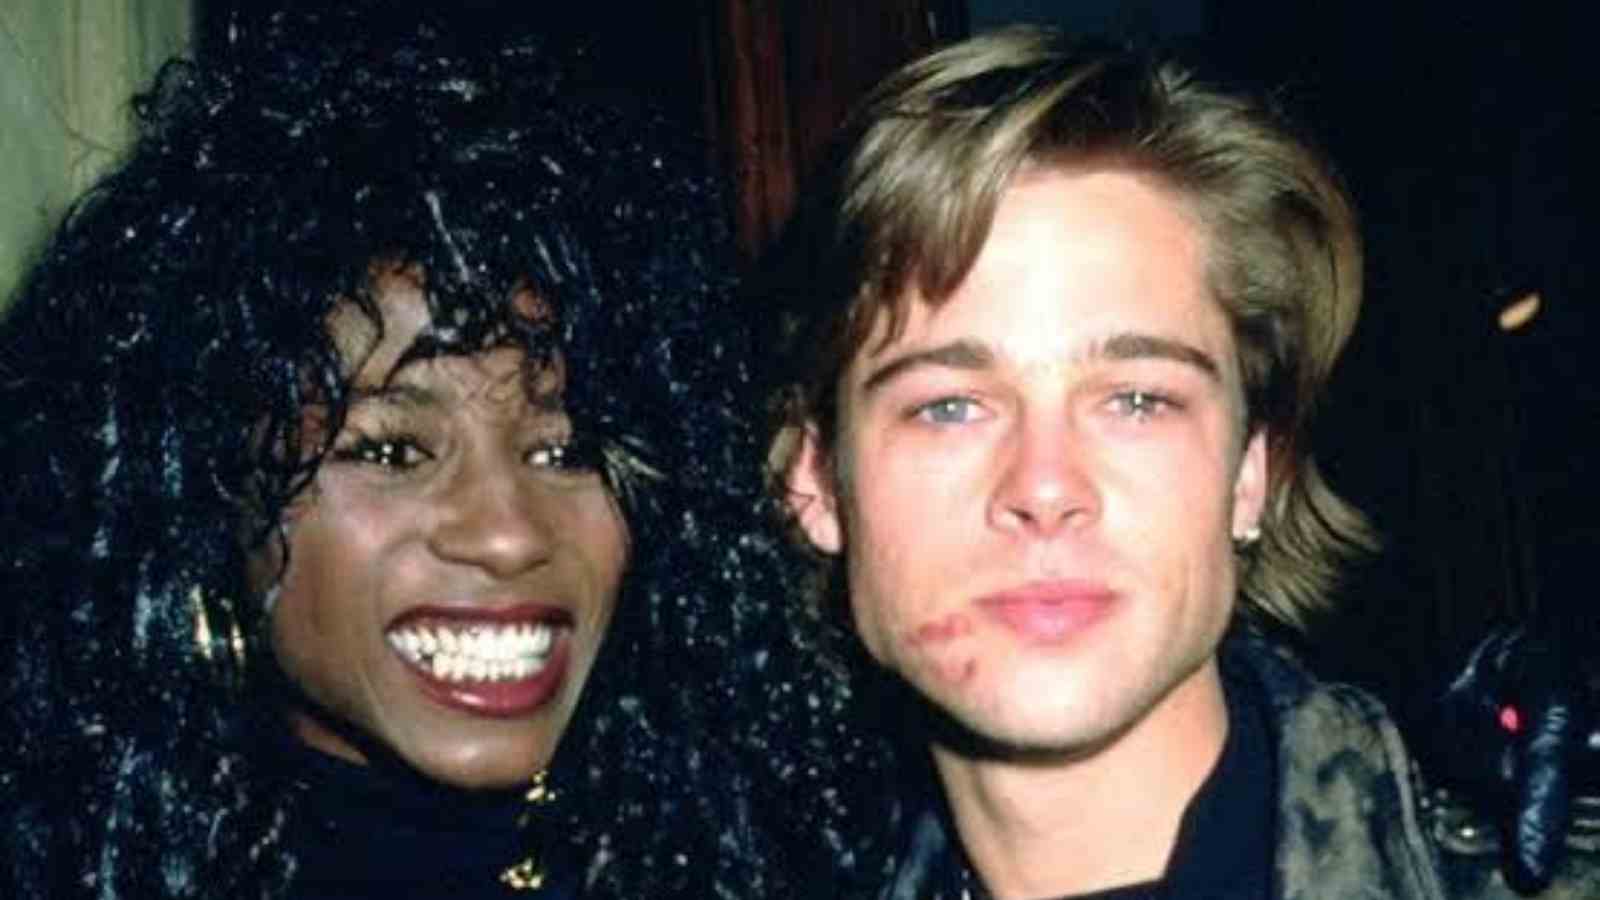 Brad Pitt's public dating history began with the British Singer Sinitta